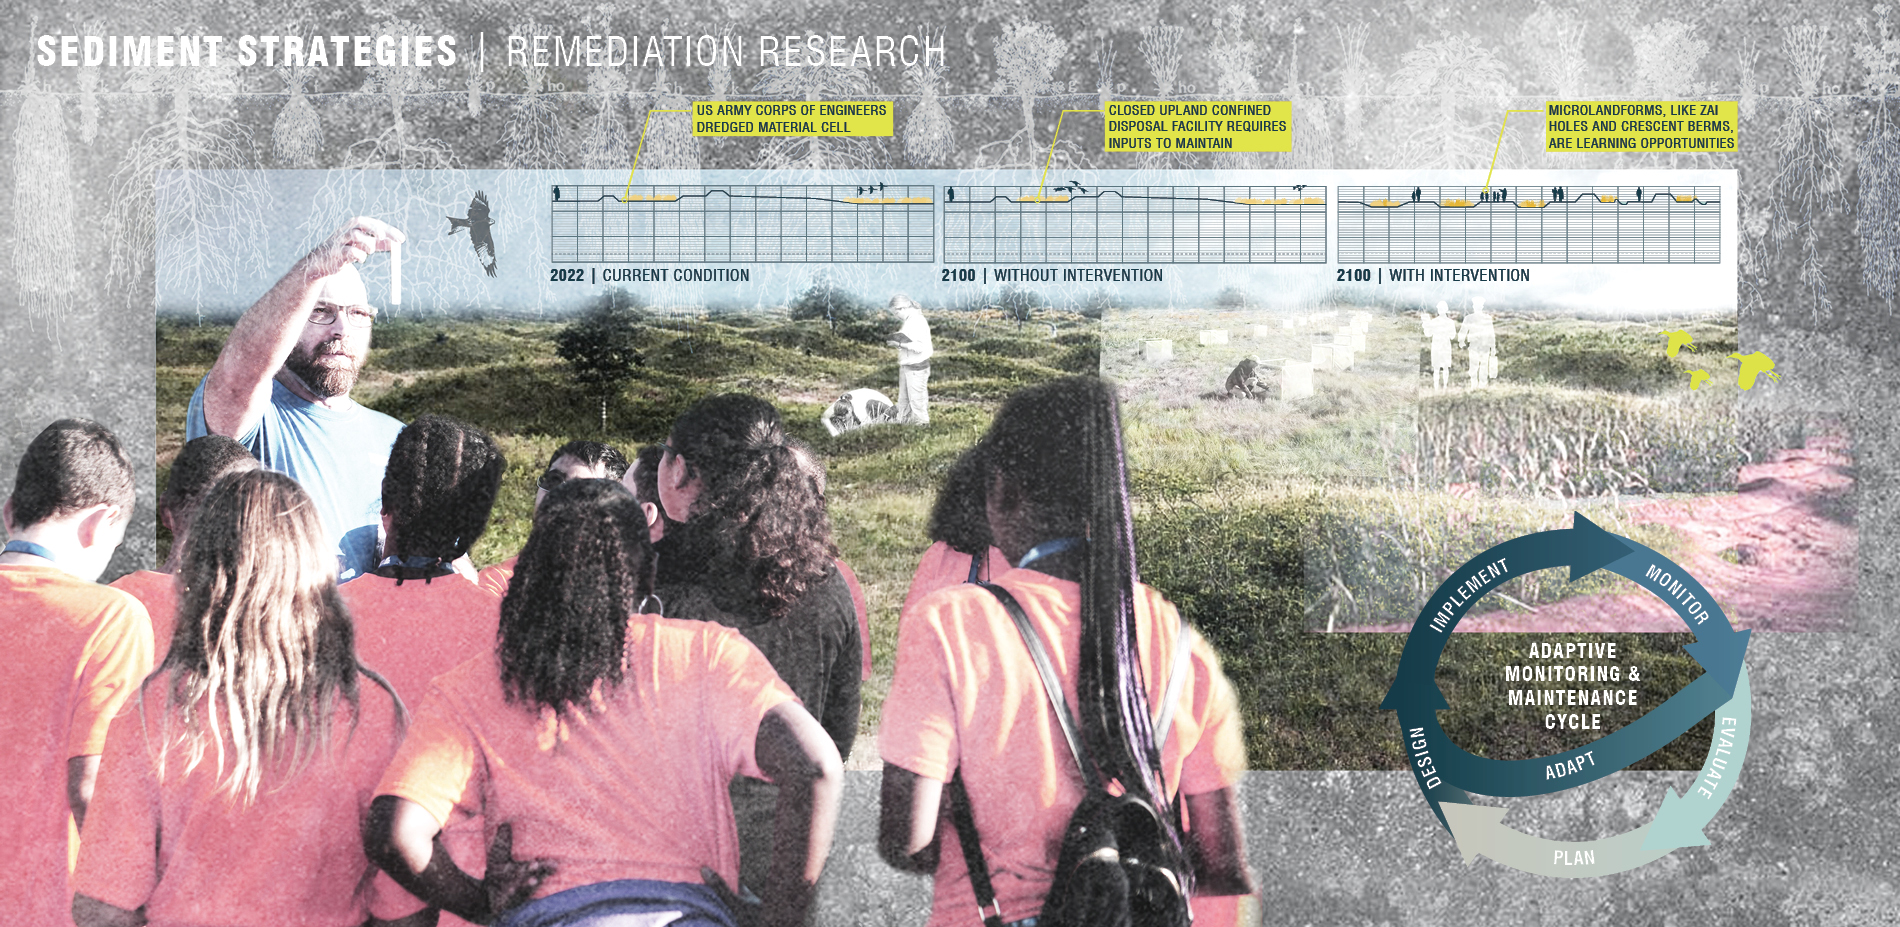 Sediment Strategy: Remediation Research